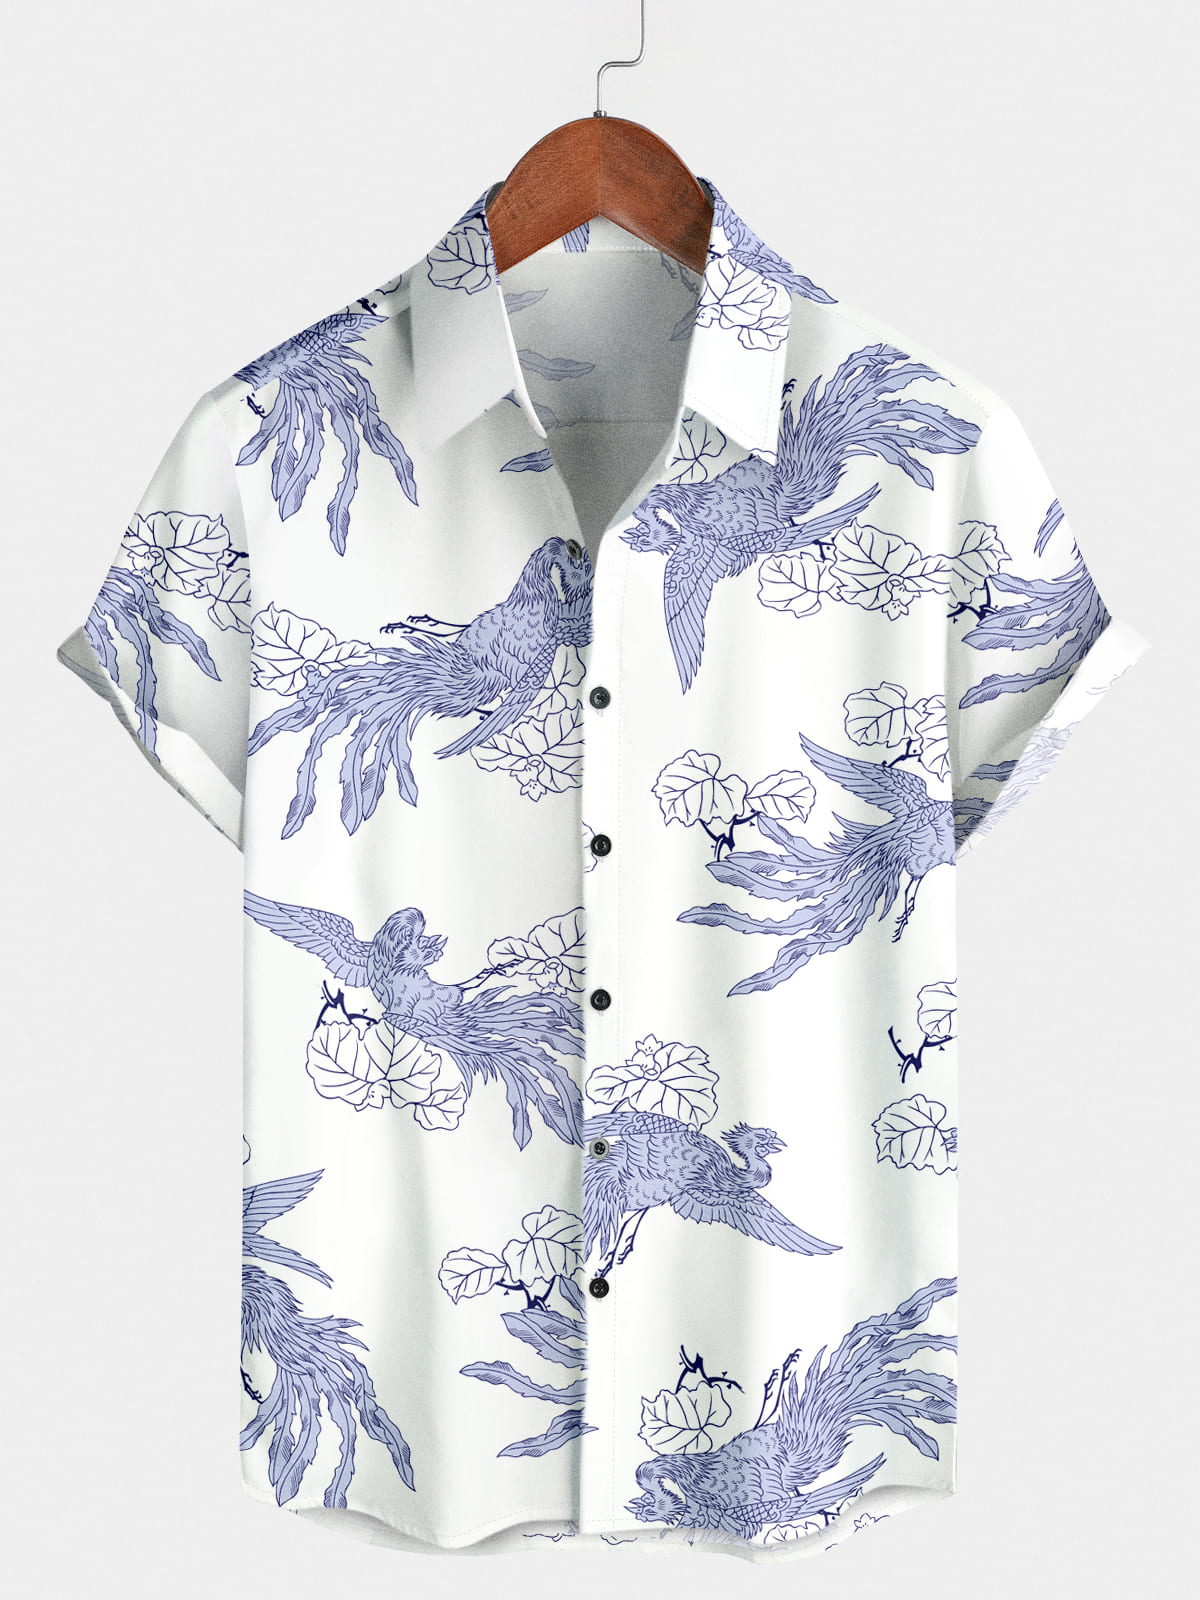 Men's Phoenix Print Short Sleeve Shirt